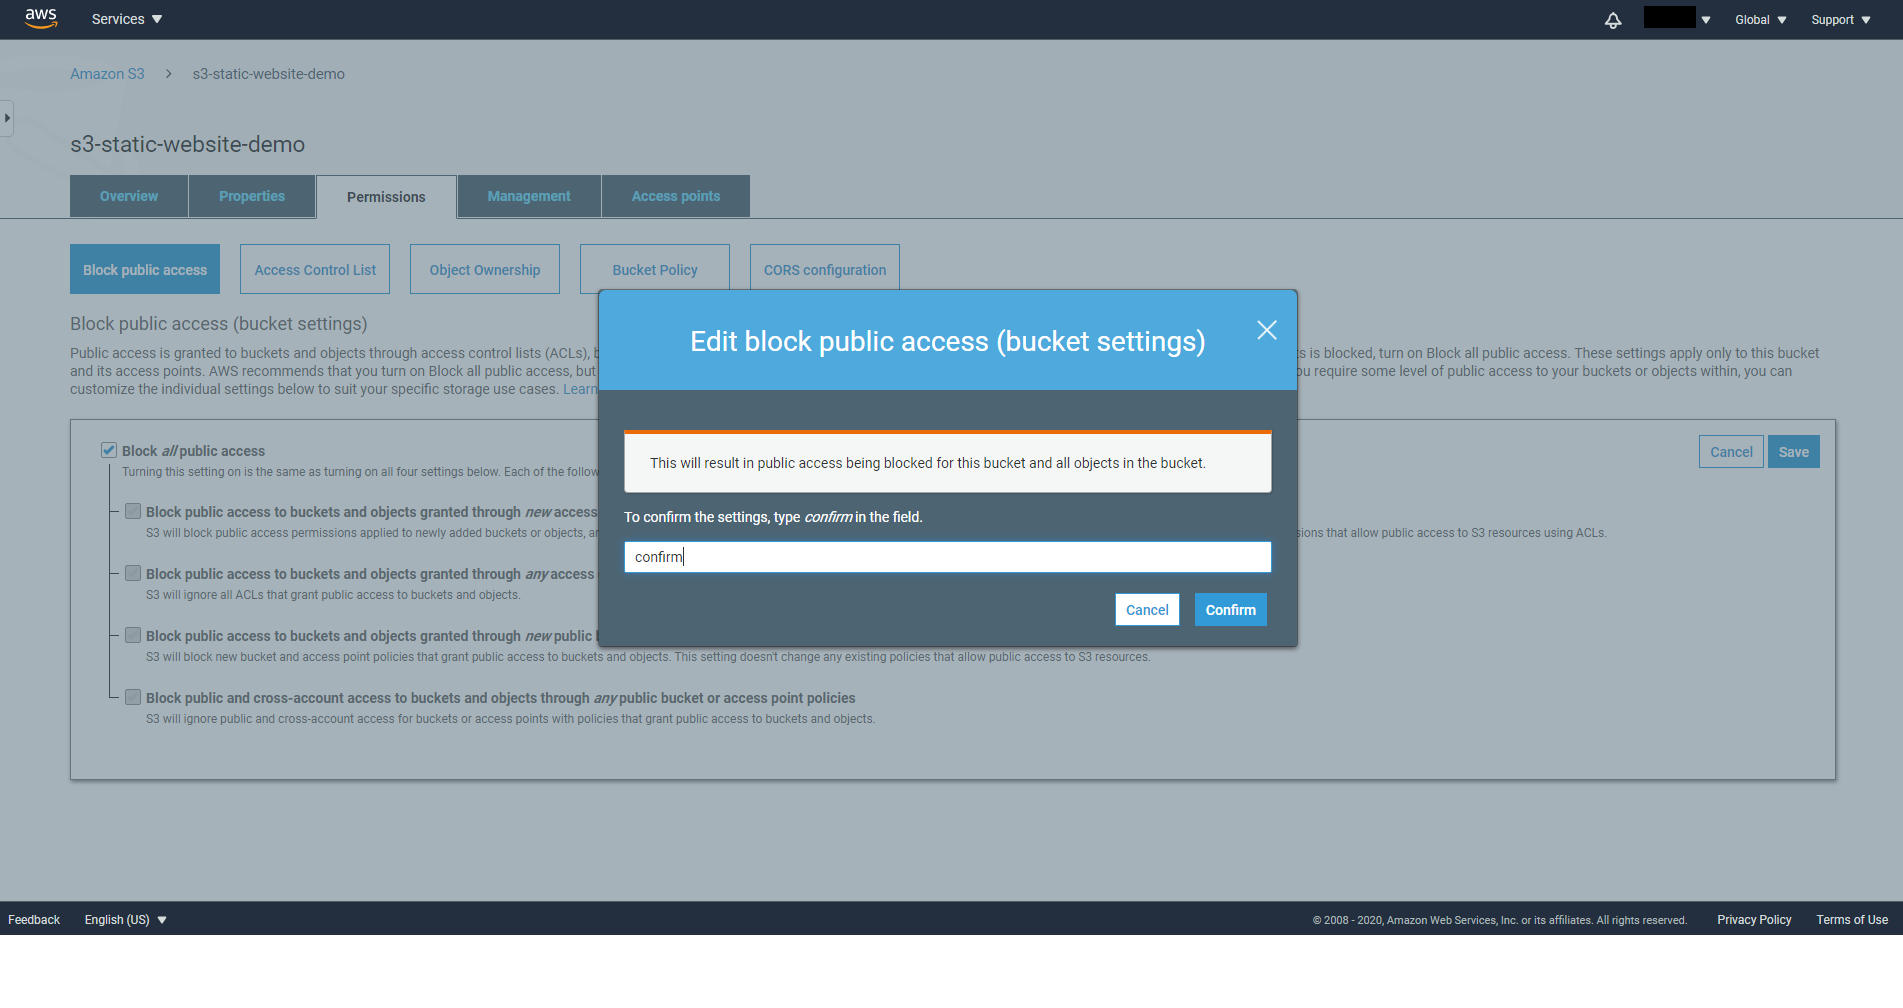 Confirm block public access to S3 Bucket